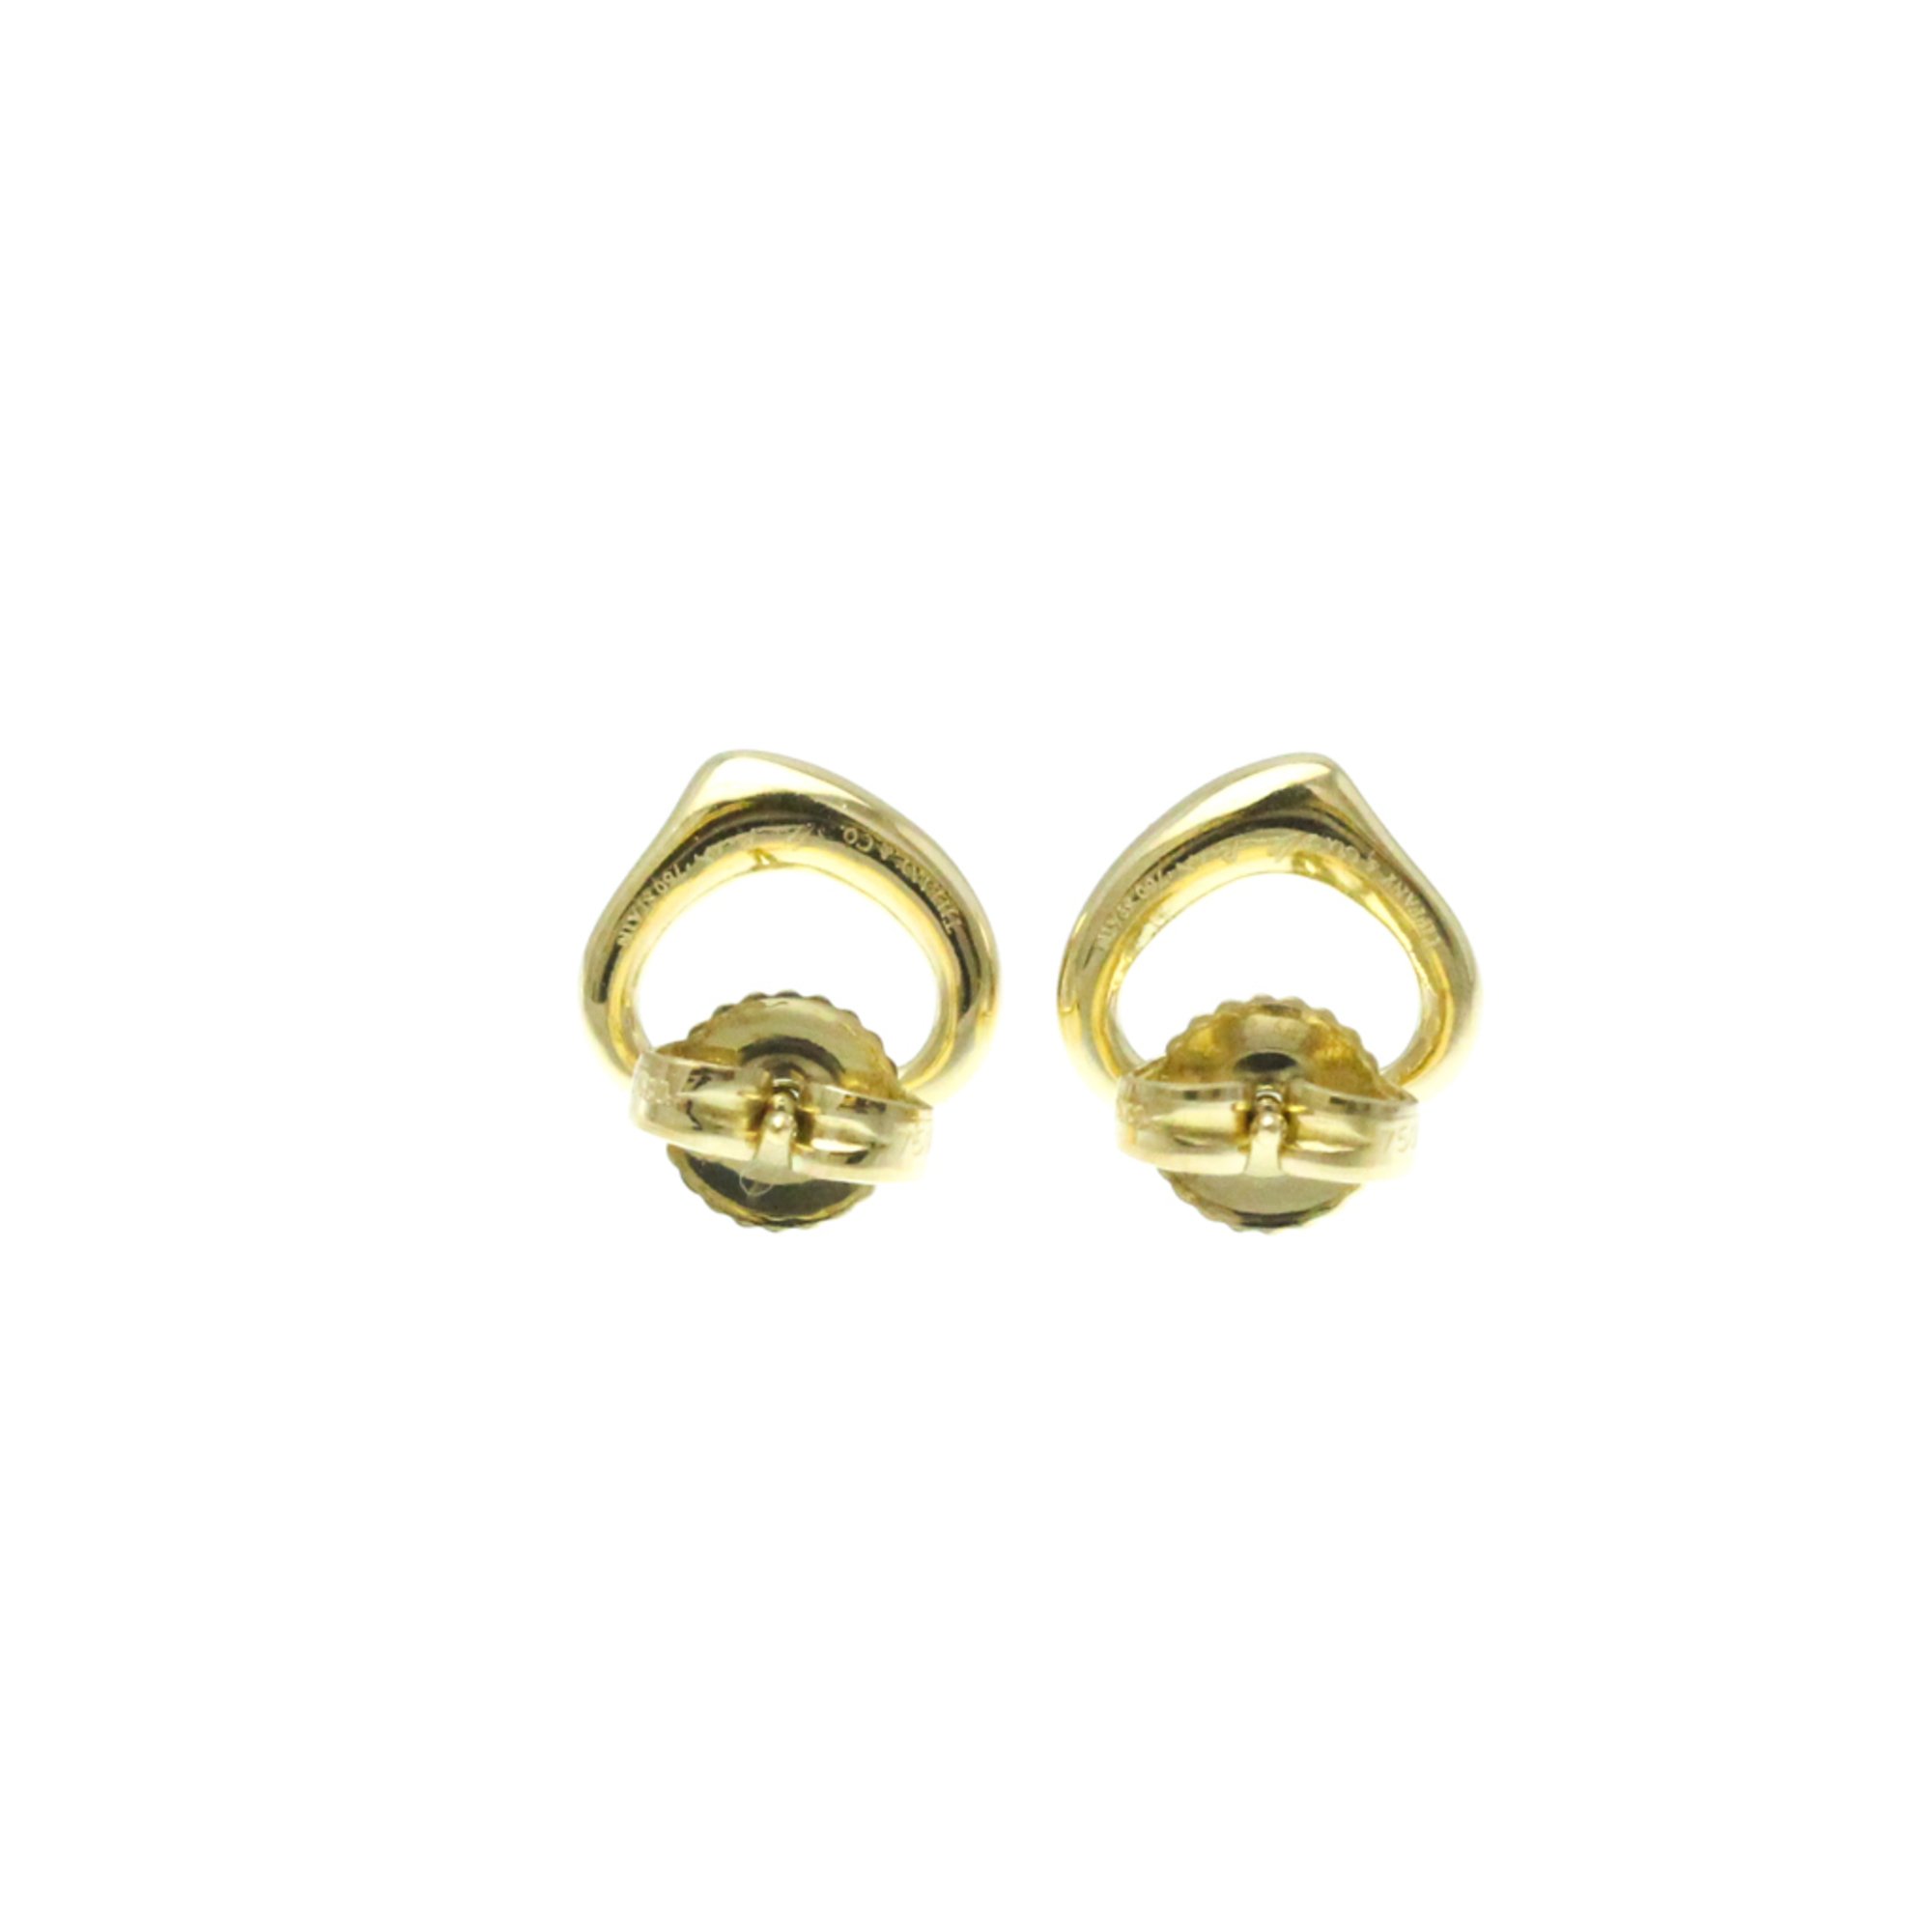 Tiffany Open Heart No Stone Yellow Gold (18K) Stud Earrings Gold